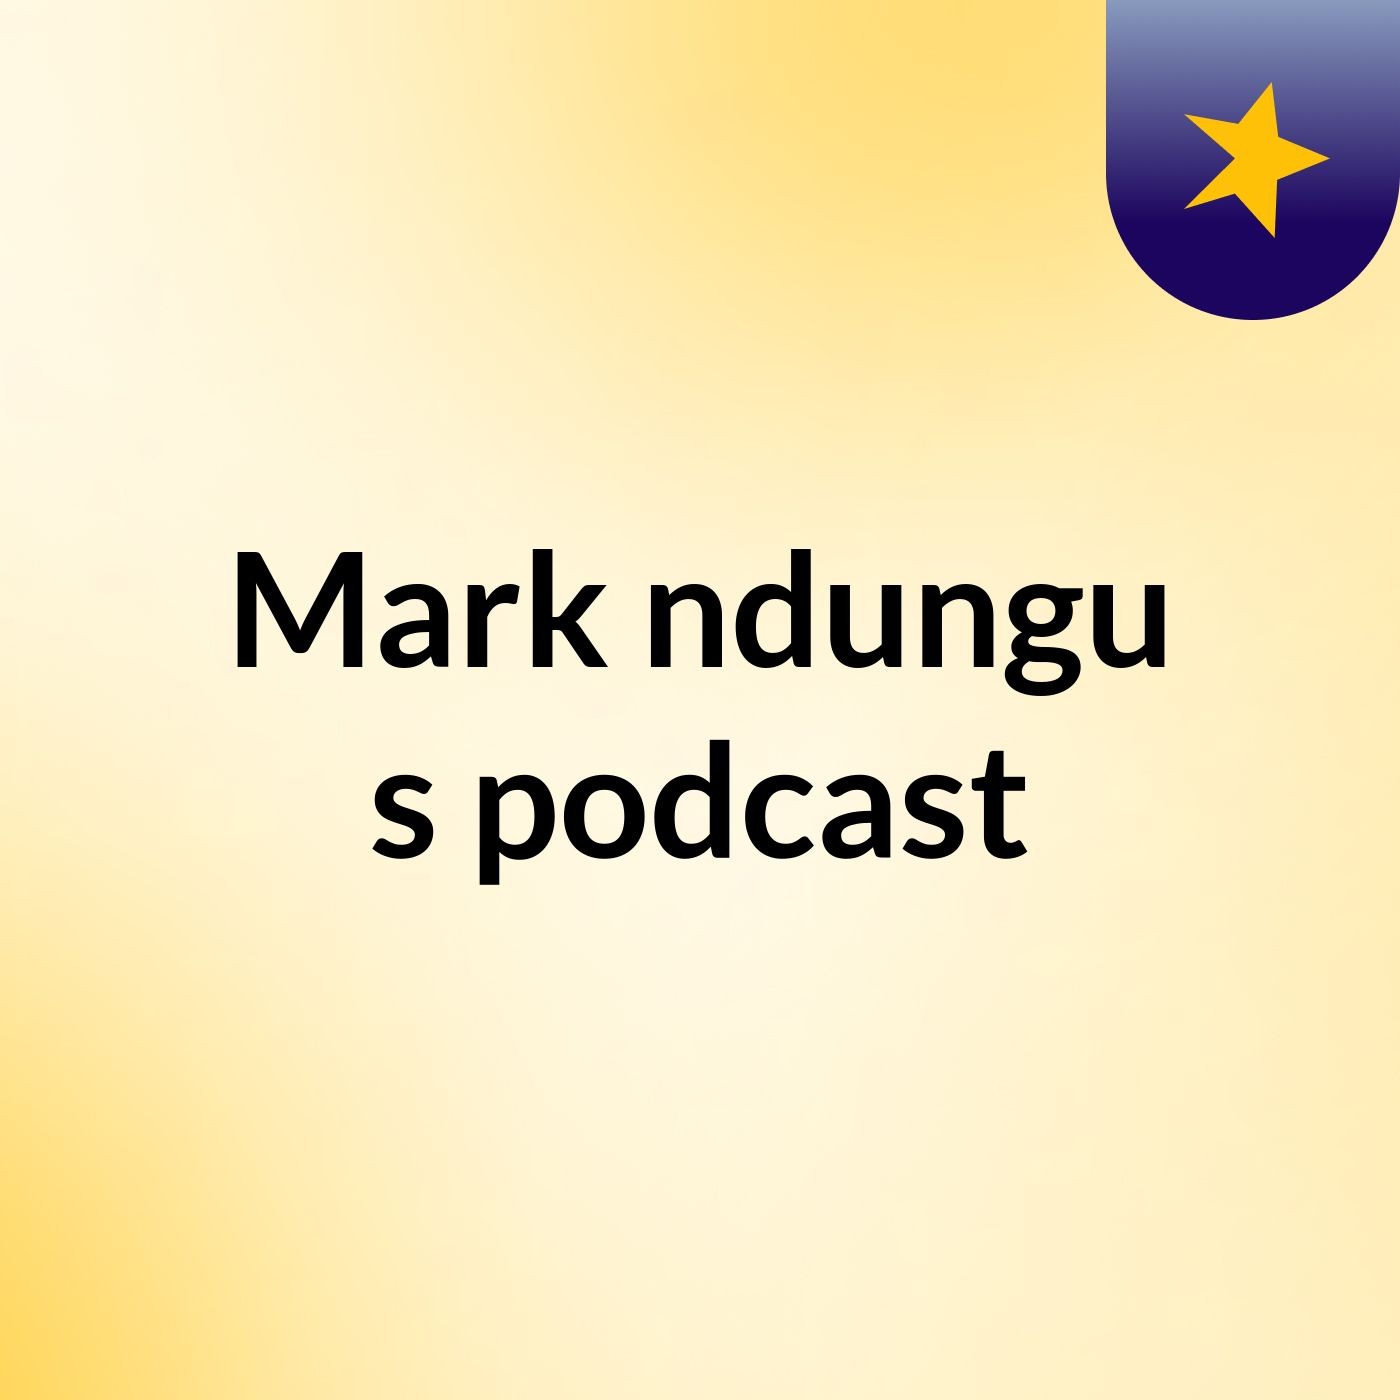 Episode 21 - Mark ndungu's podcast